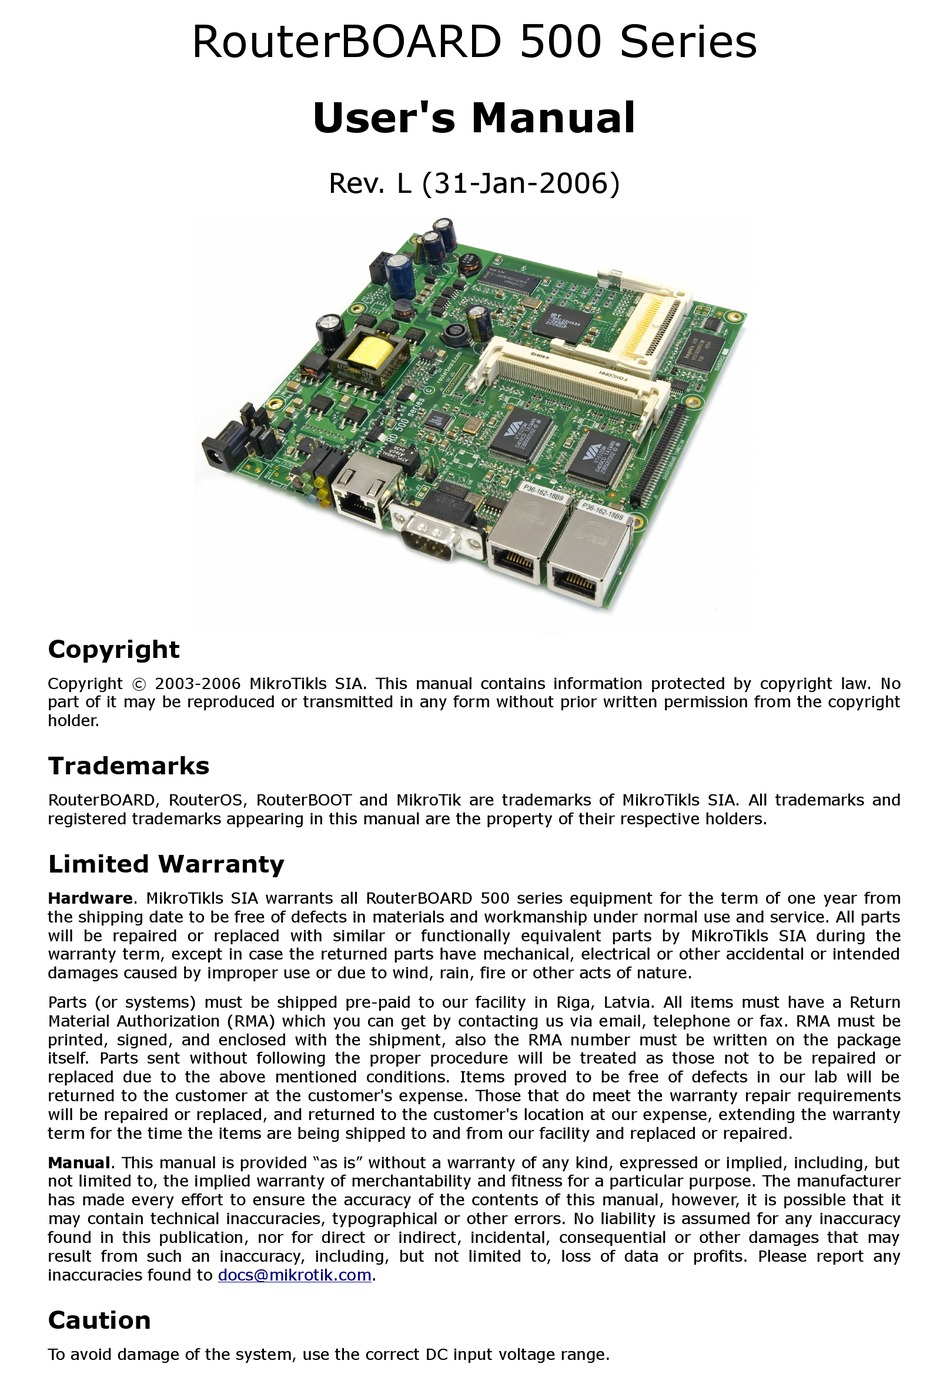 mikrotik routeros manual